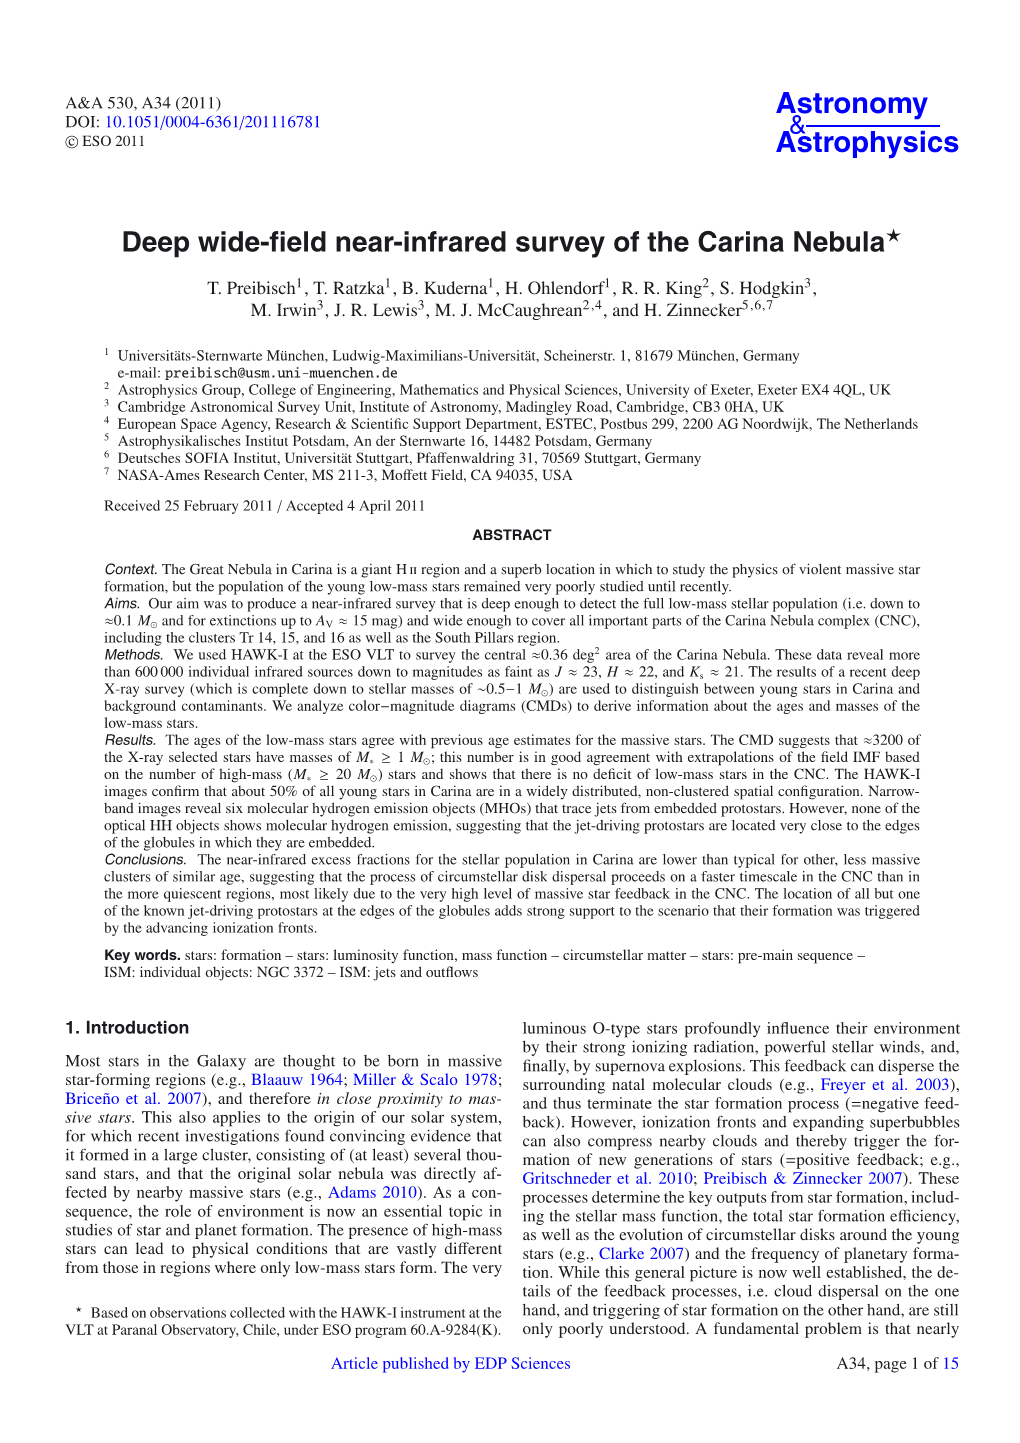 Deep Wide-Field Near-Infrared Survey of the Carina Nebula⋆